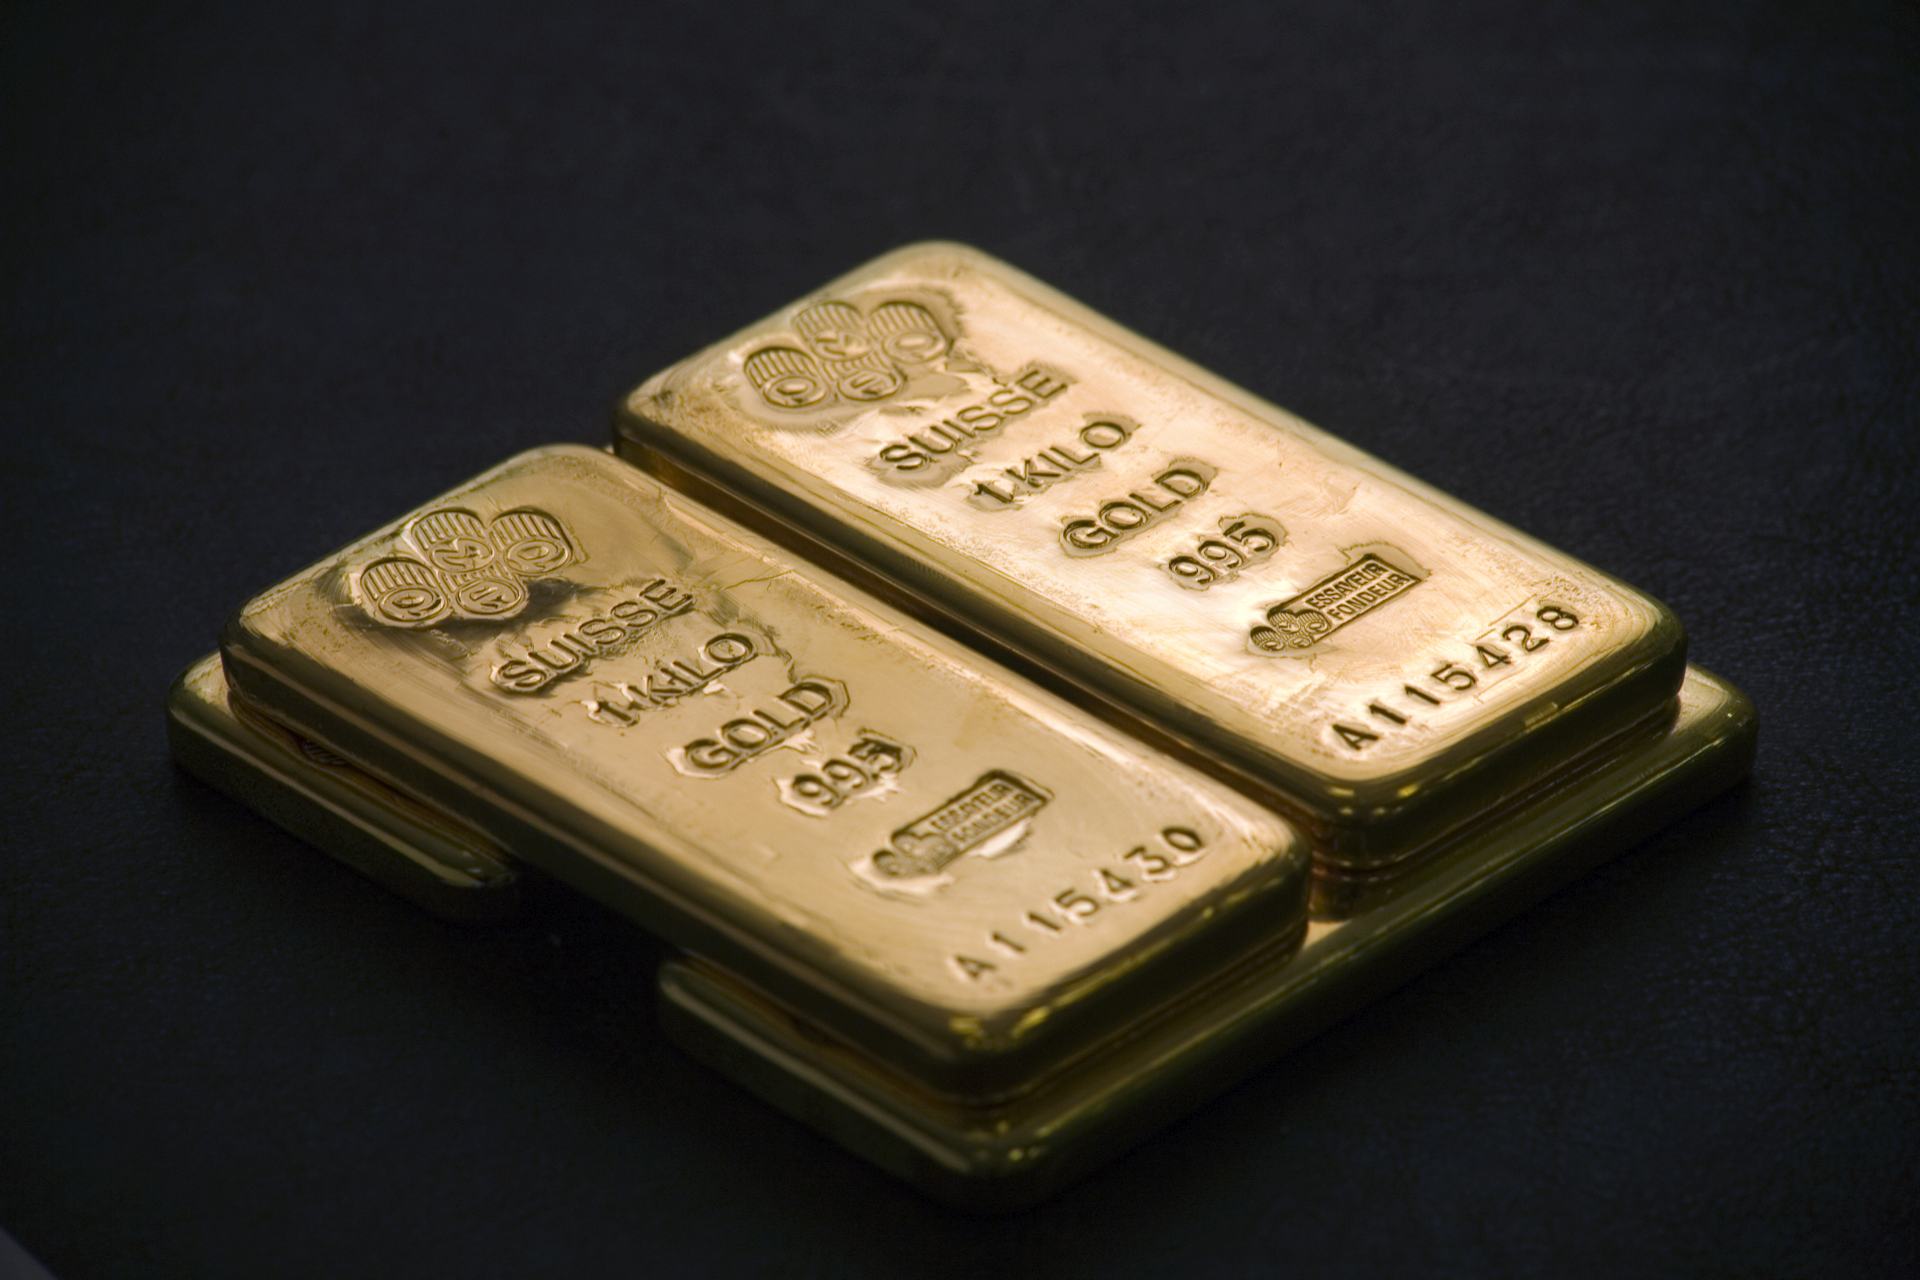  Svět burzy kovy zlato ceny 